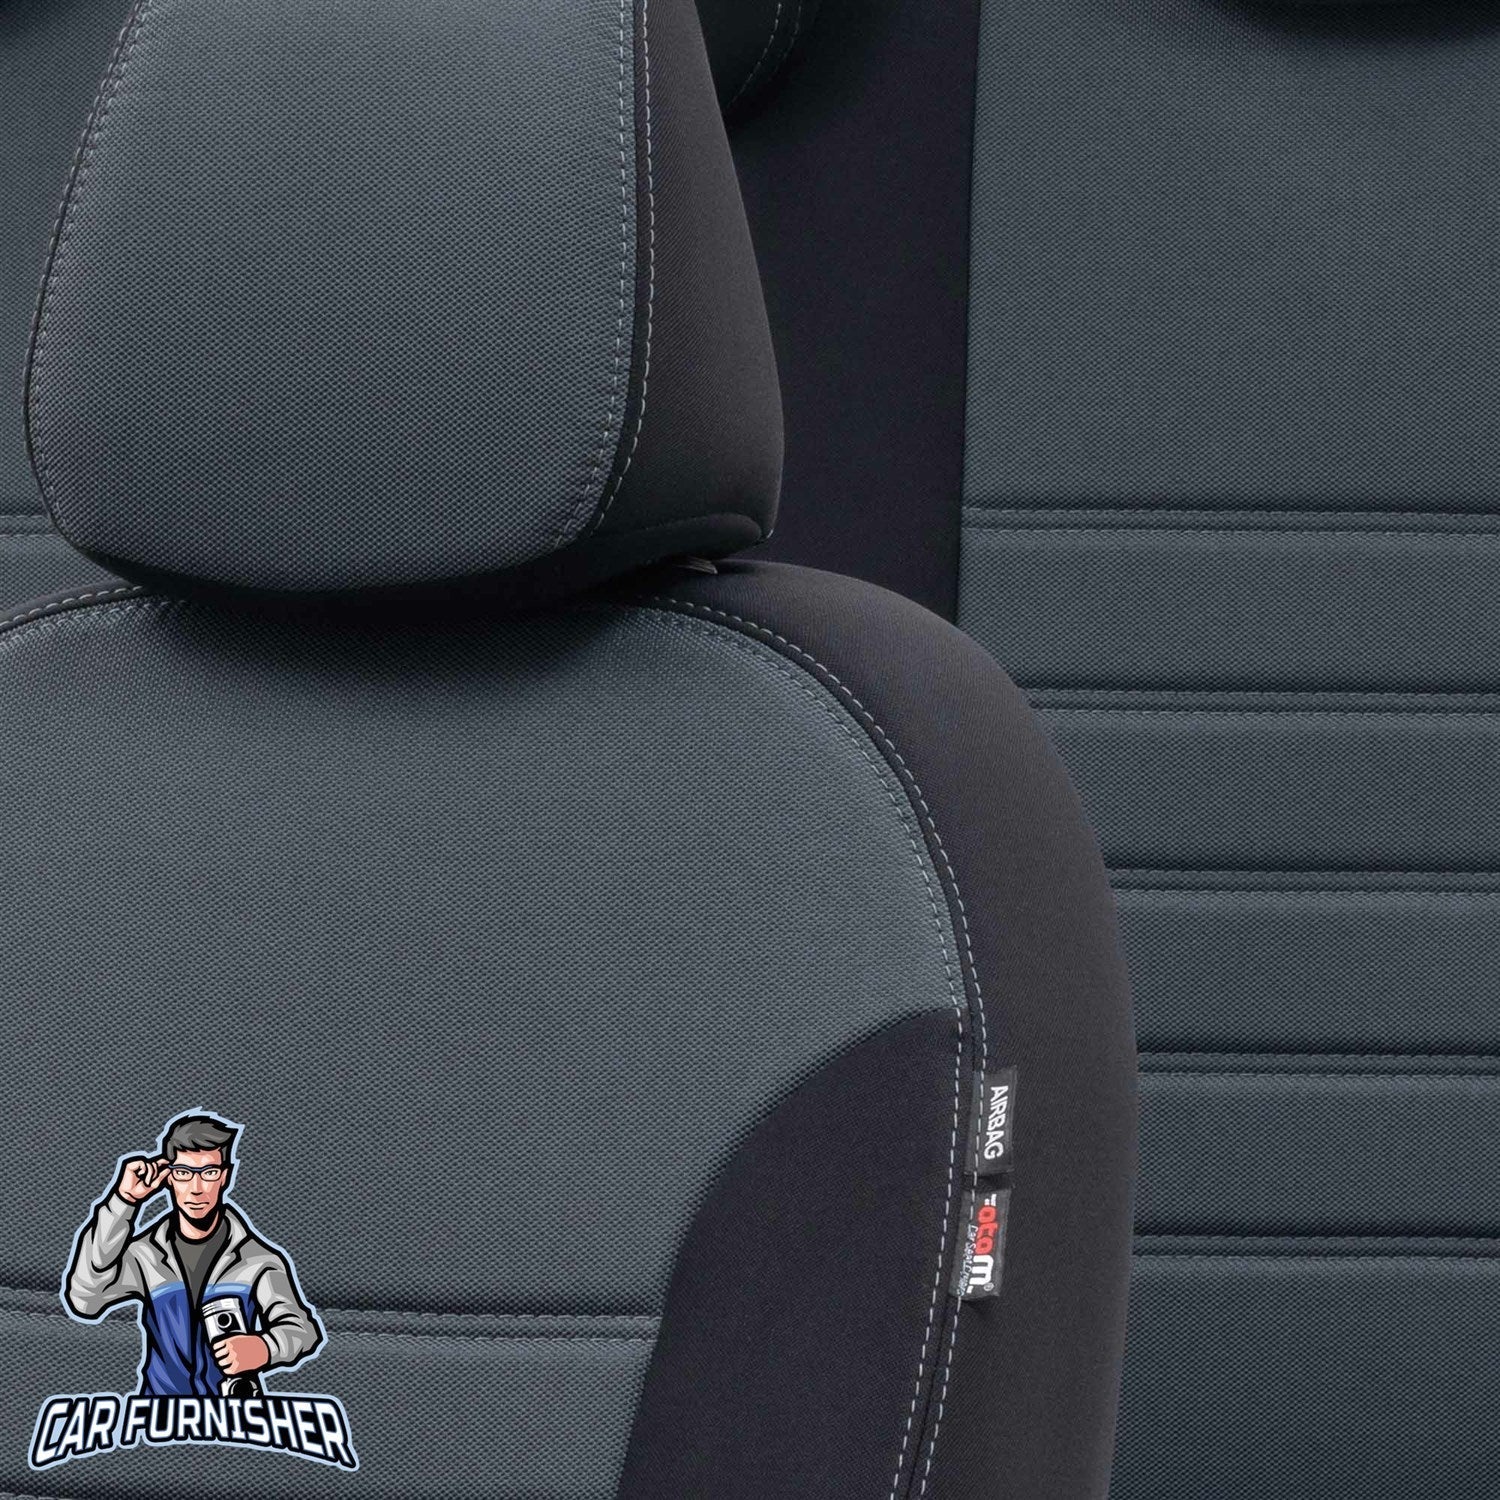 Ford Transit Seat Covers Original Jacquard Design Smoked Black Jacquard Fabric